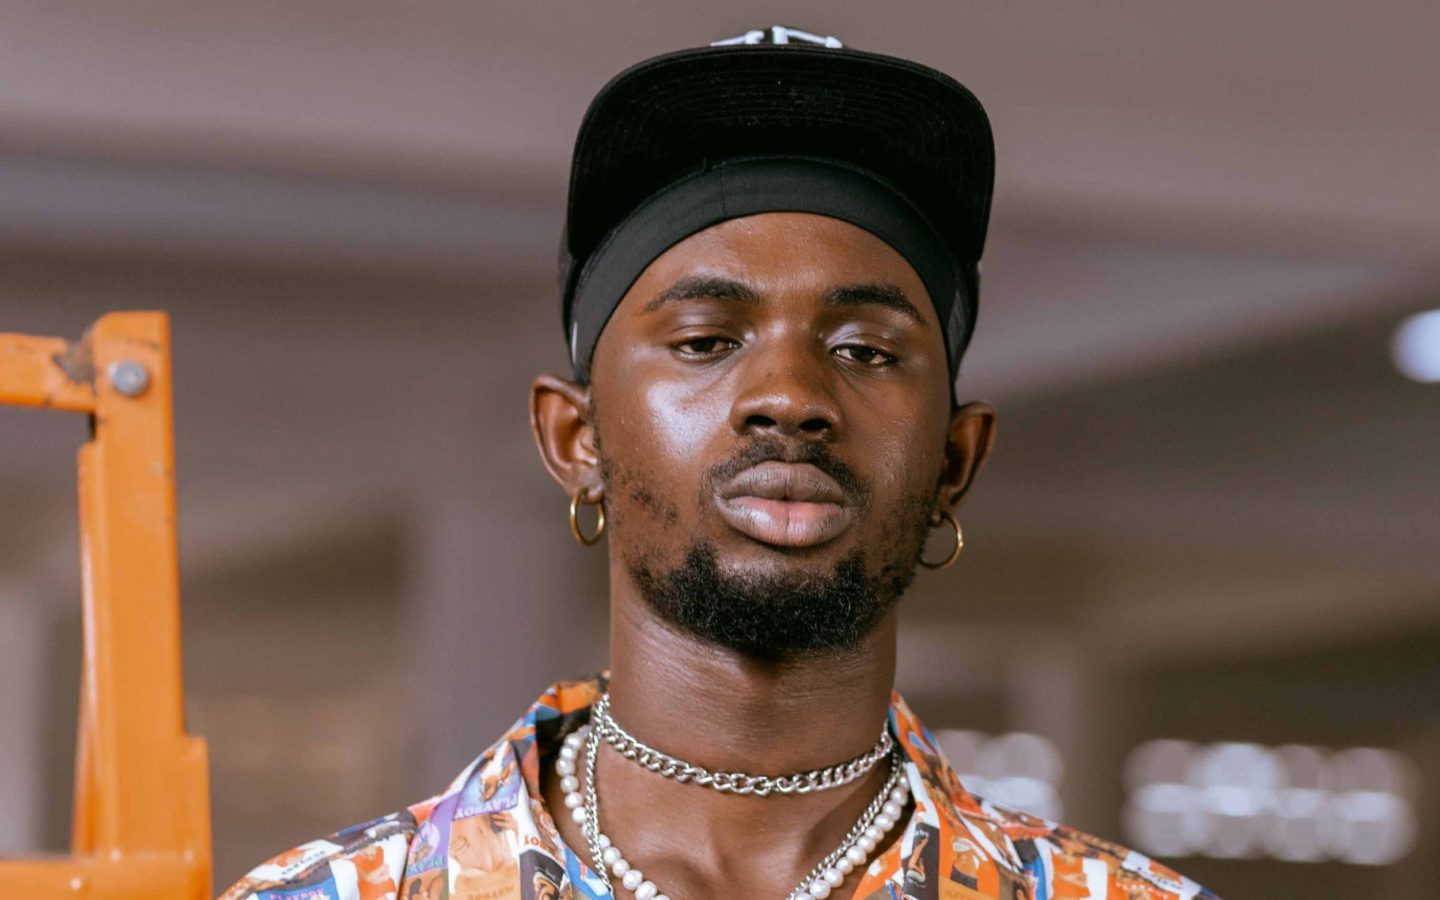 “I Am Going Through A Lot” – Popular Ghanaian Rapper, Black Sherif’s Recent Post Raises Concern Latest Songs